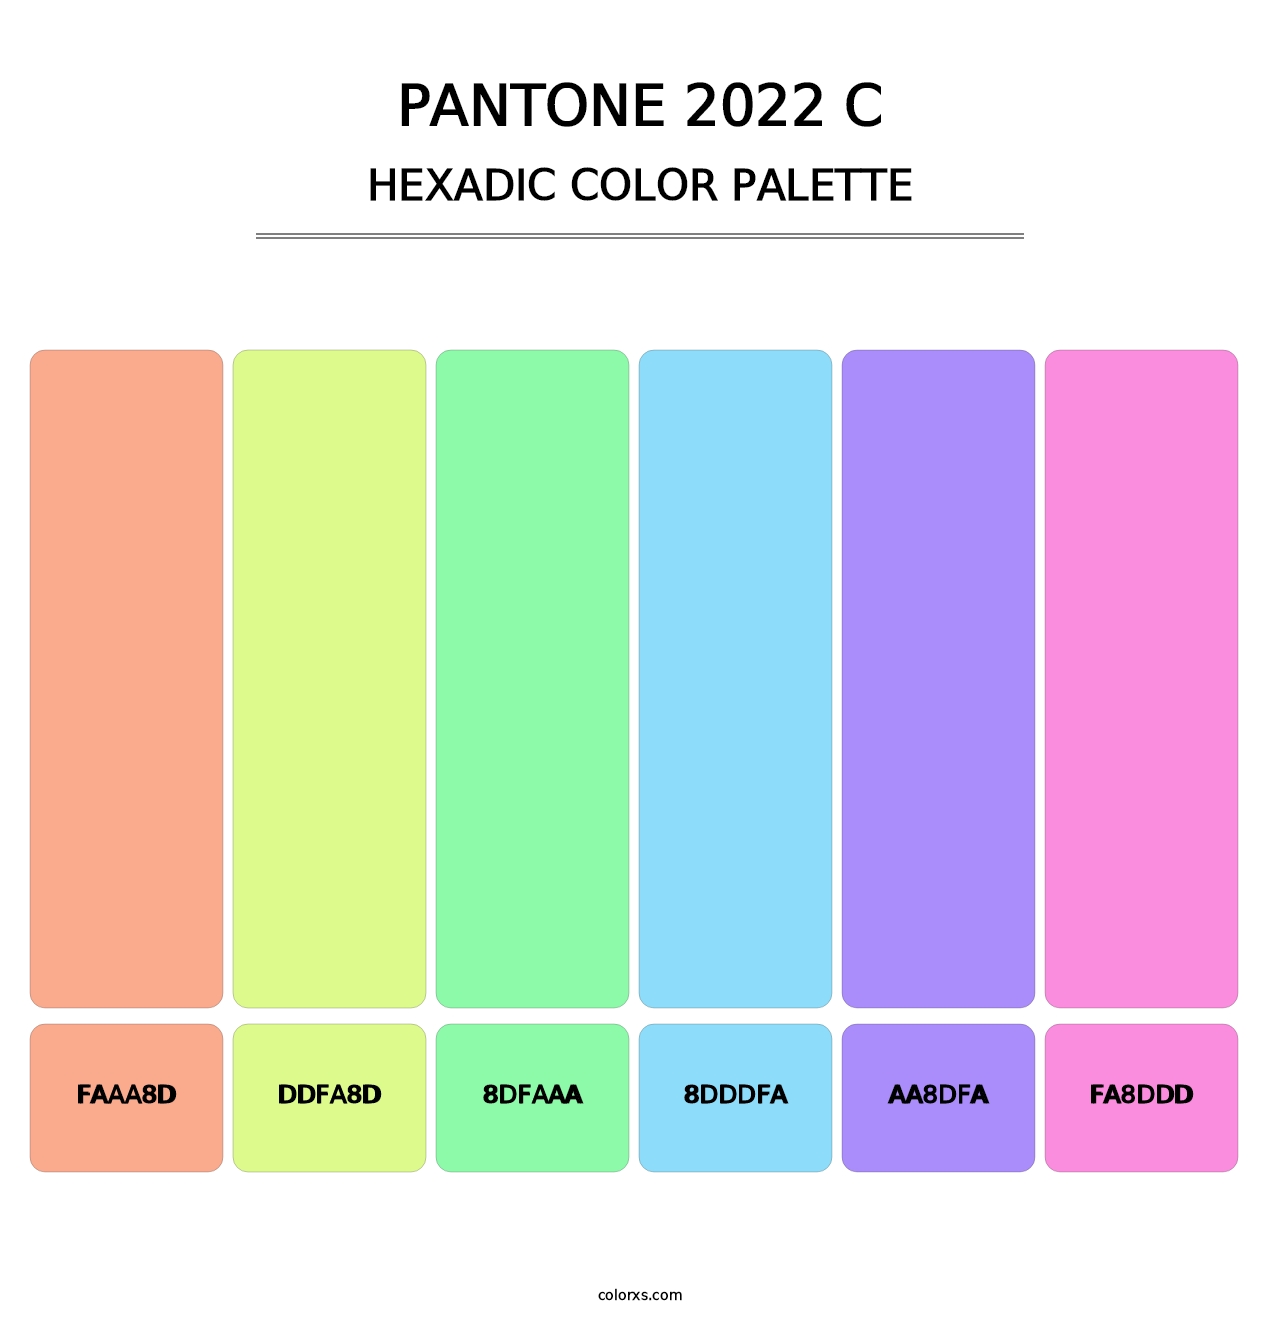 PANTONE 2022 C - Hexadic Color Palette